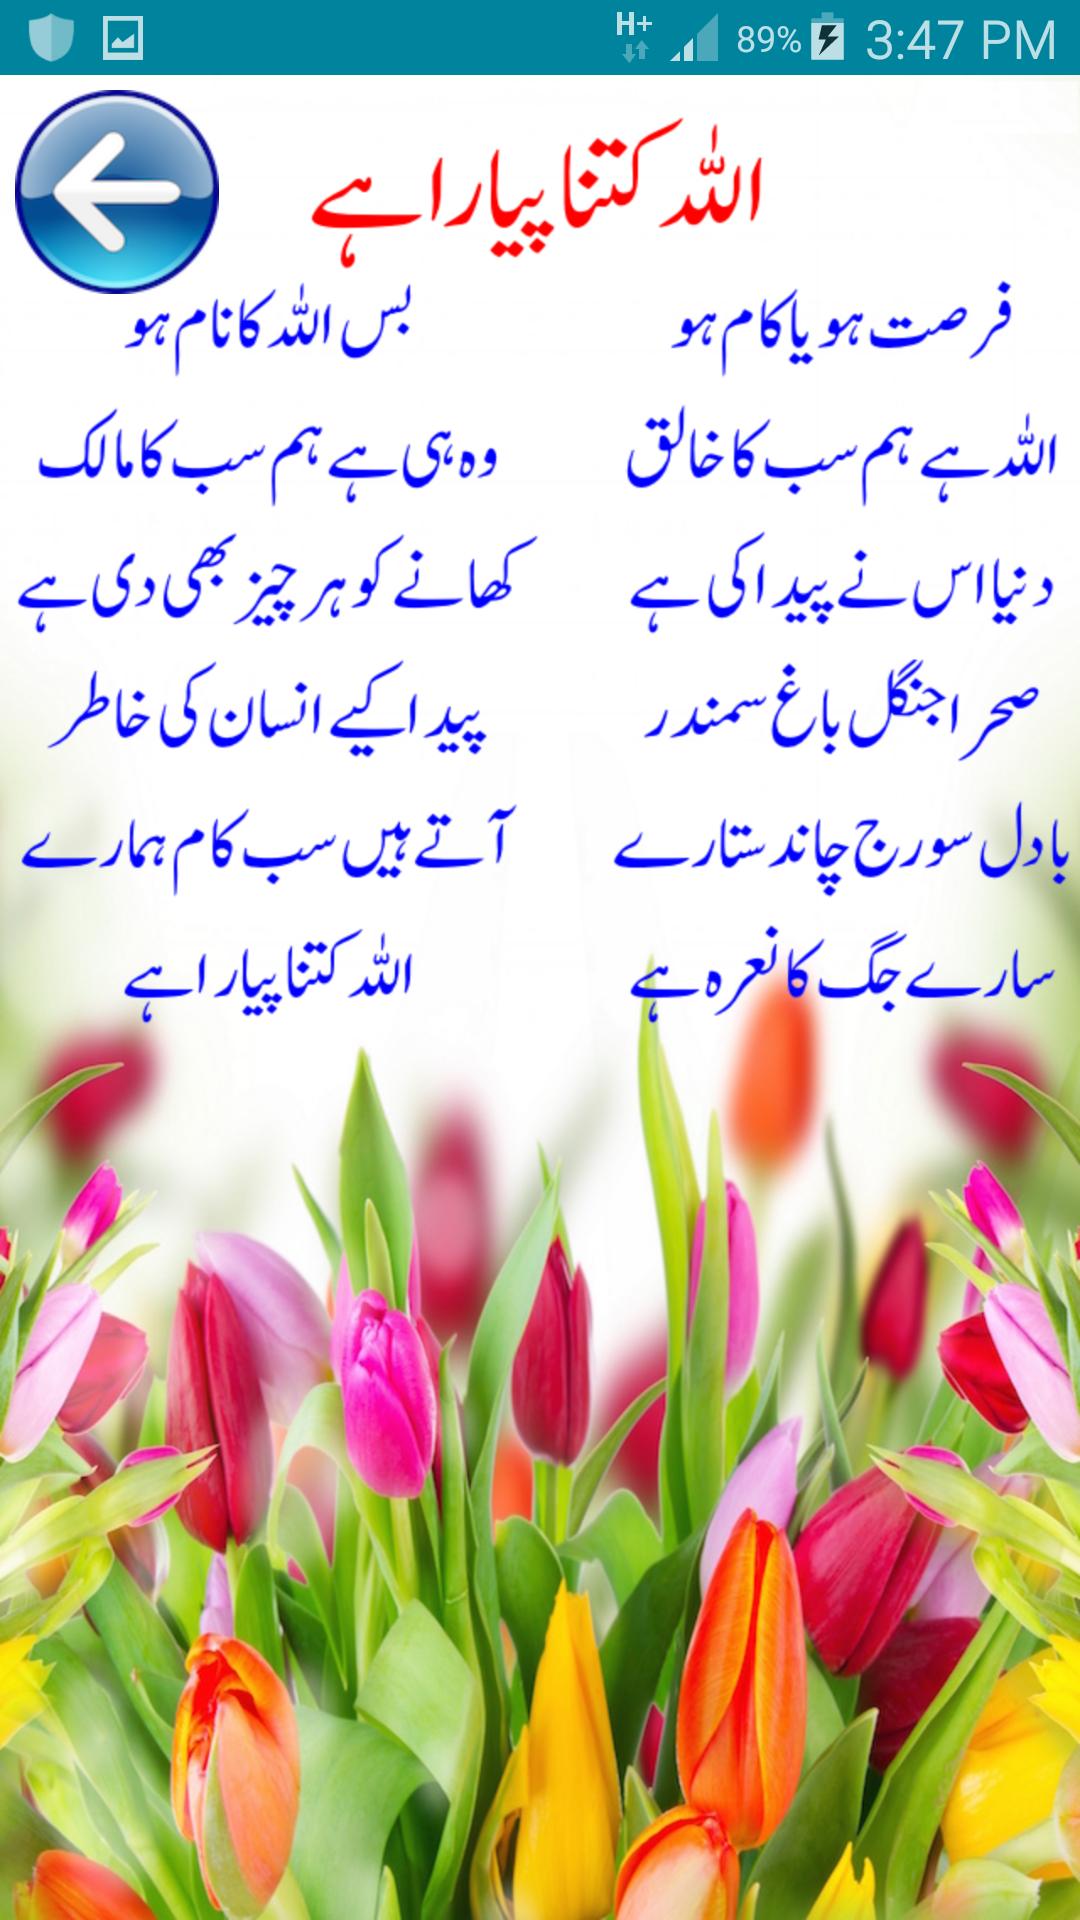 Islamic Poems For Kids In Urdu